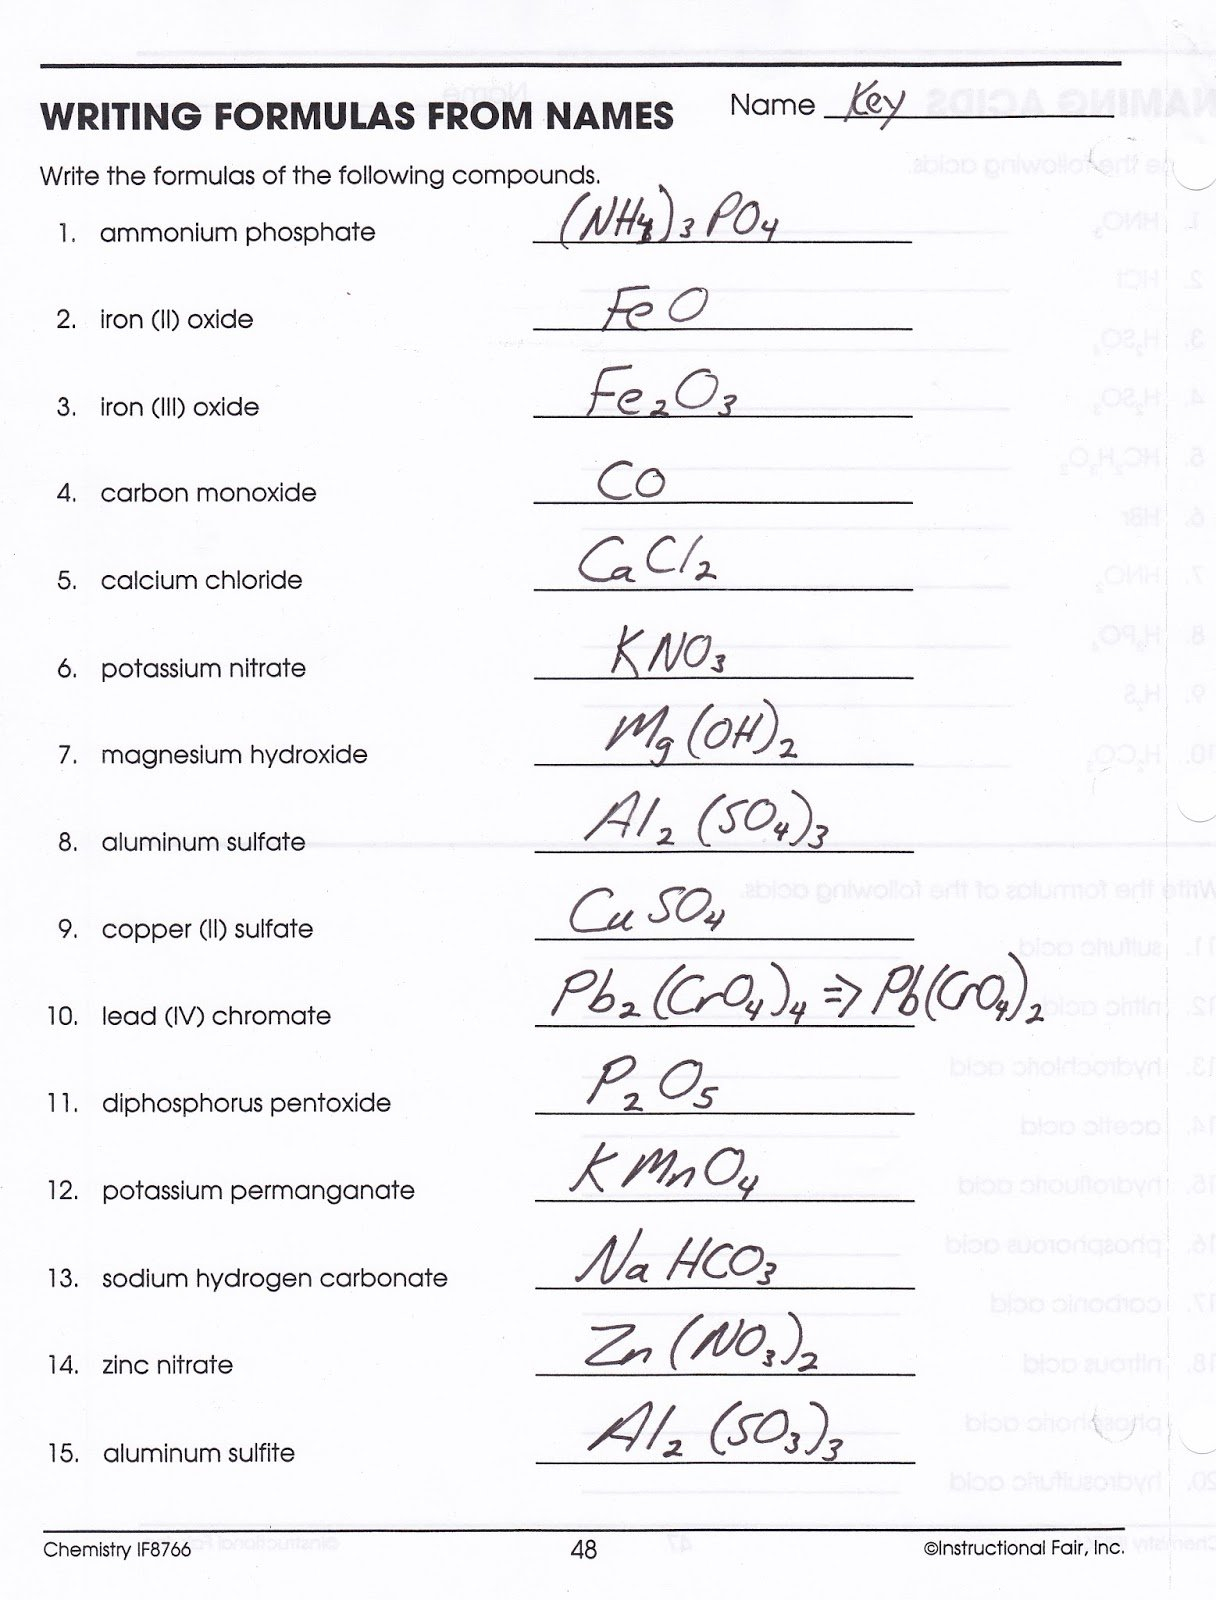 Worksheet Chemical Formula Writing Worksheet Worksheet For Writing For Chemical Formula Worksheet Answers